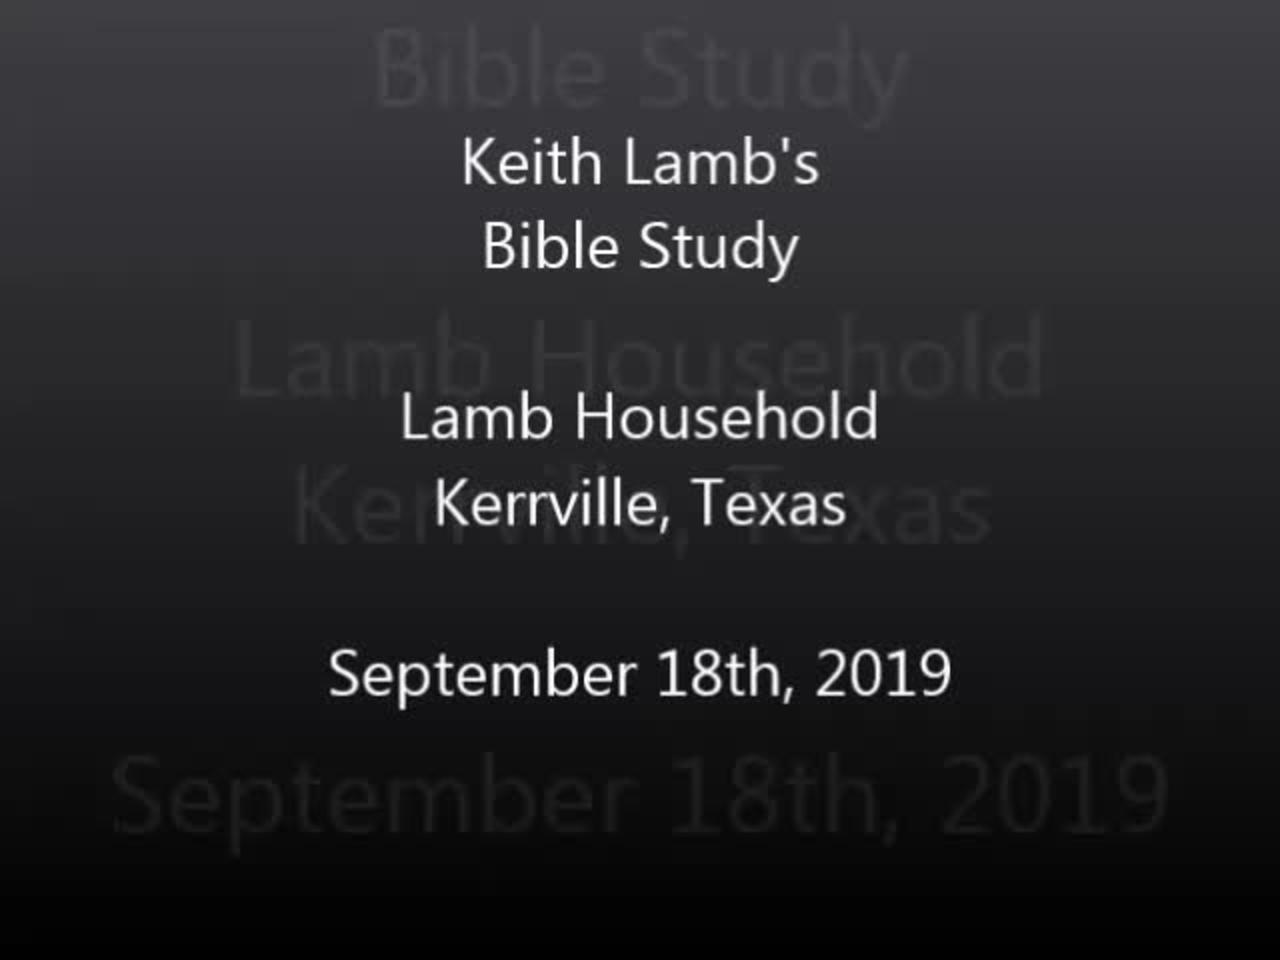 Bible Study at the Lamb's part 3